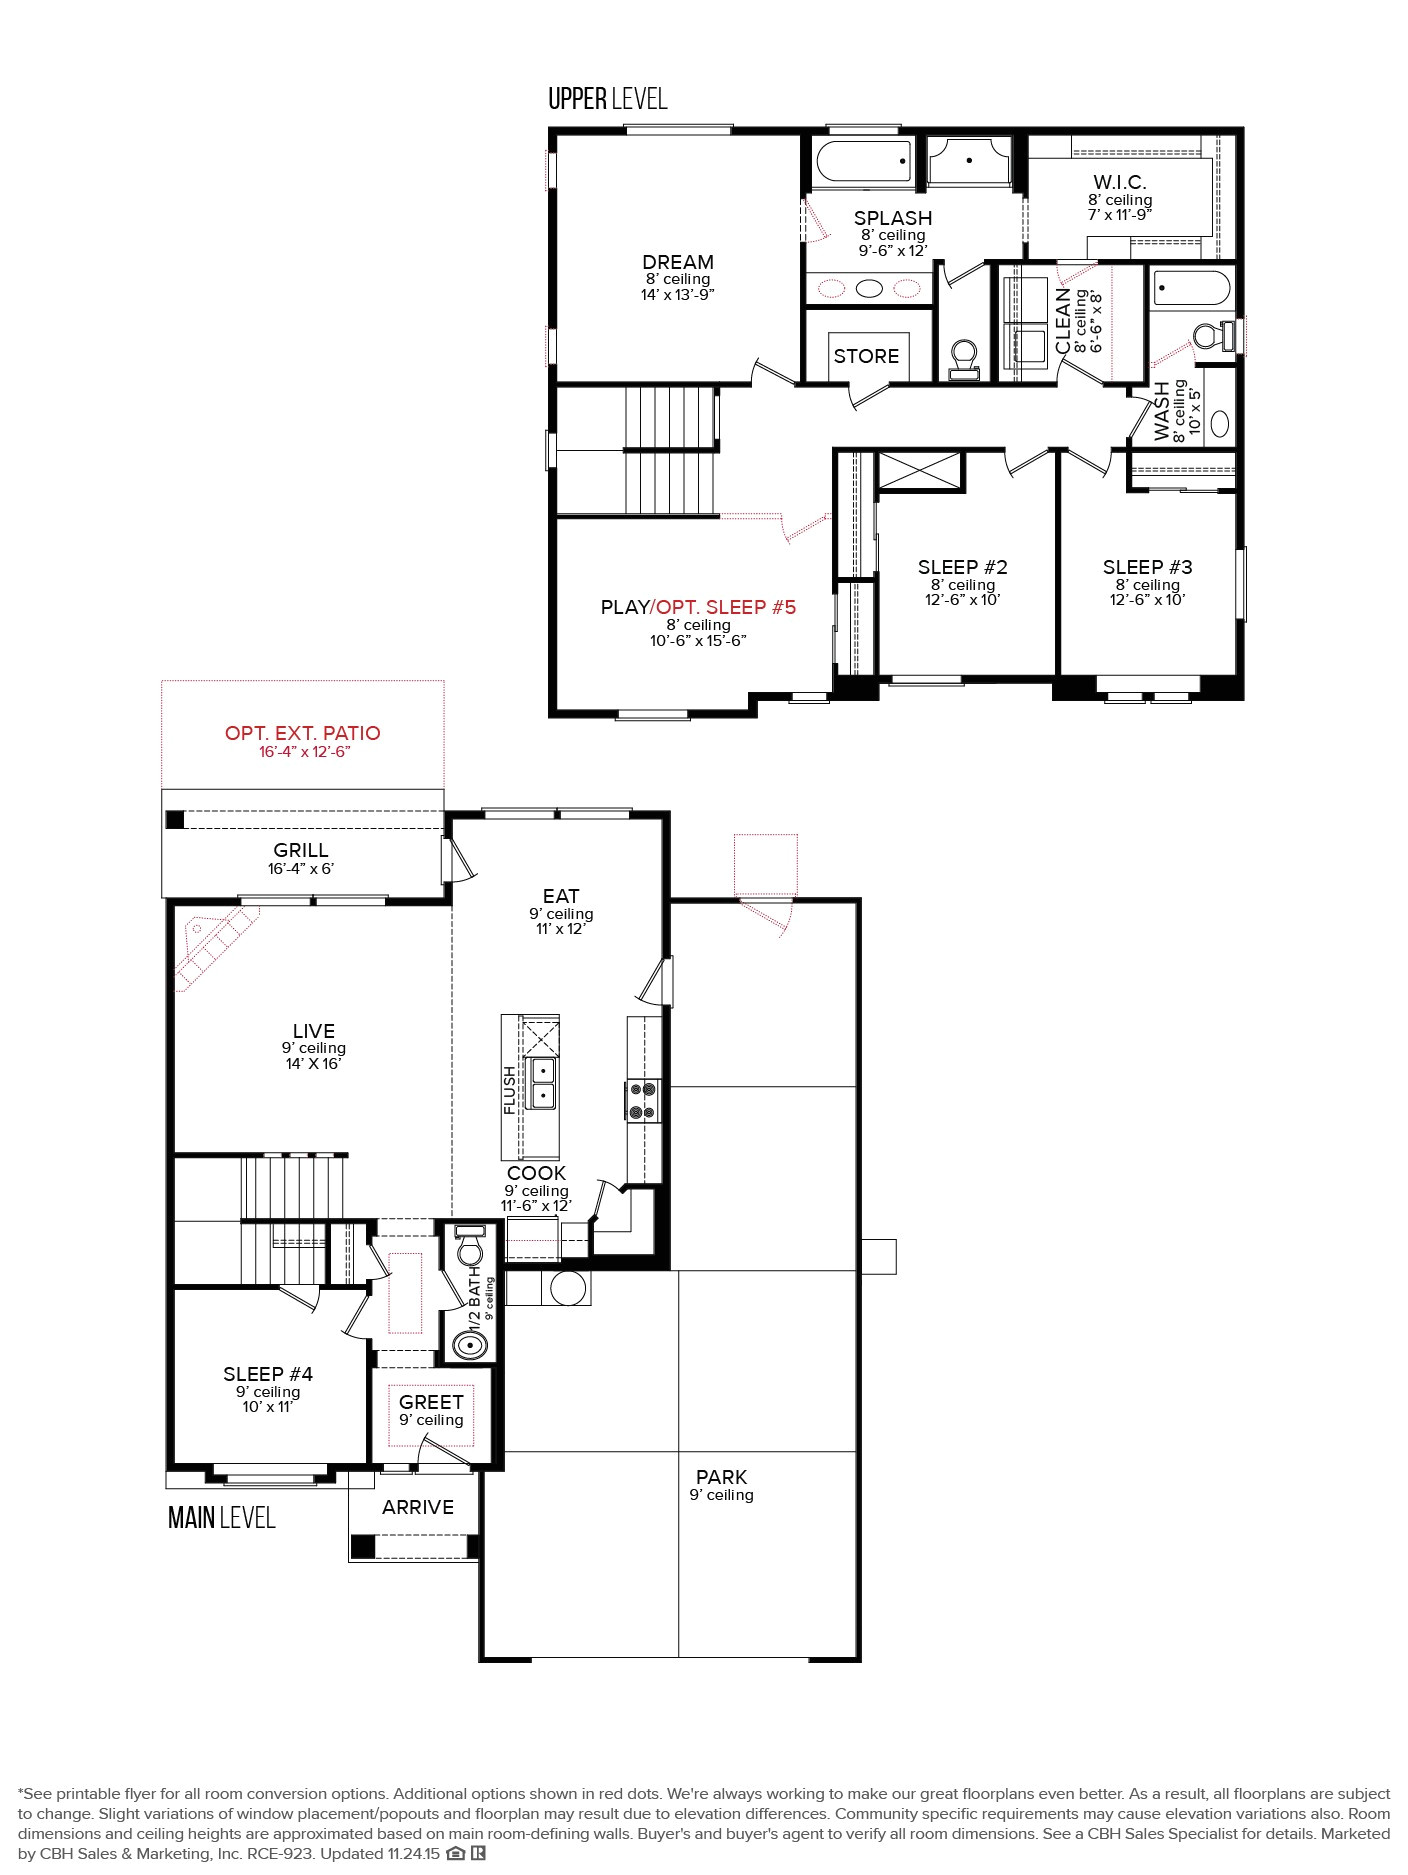 paragon floor plan beautiful pasadena 2351 floor plan layouts home style pinterest